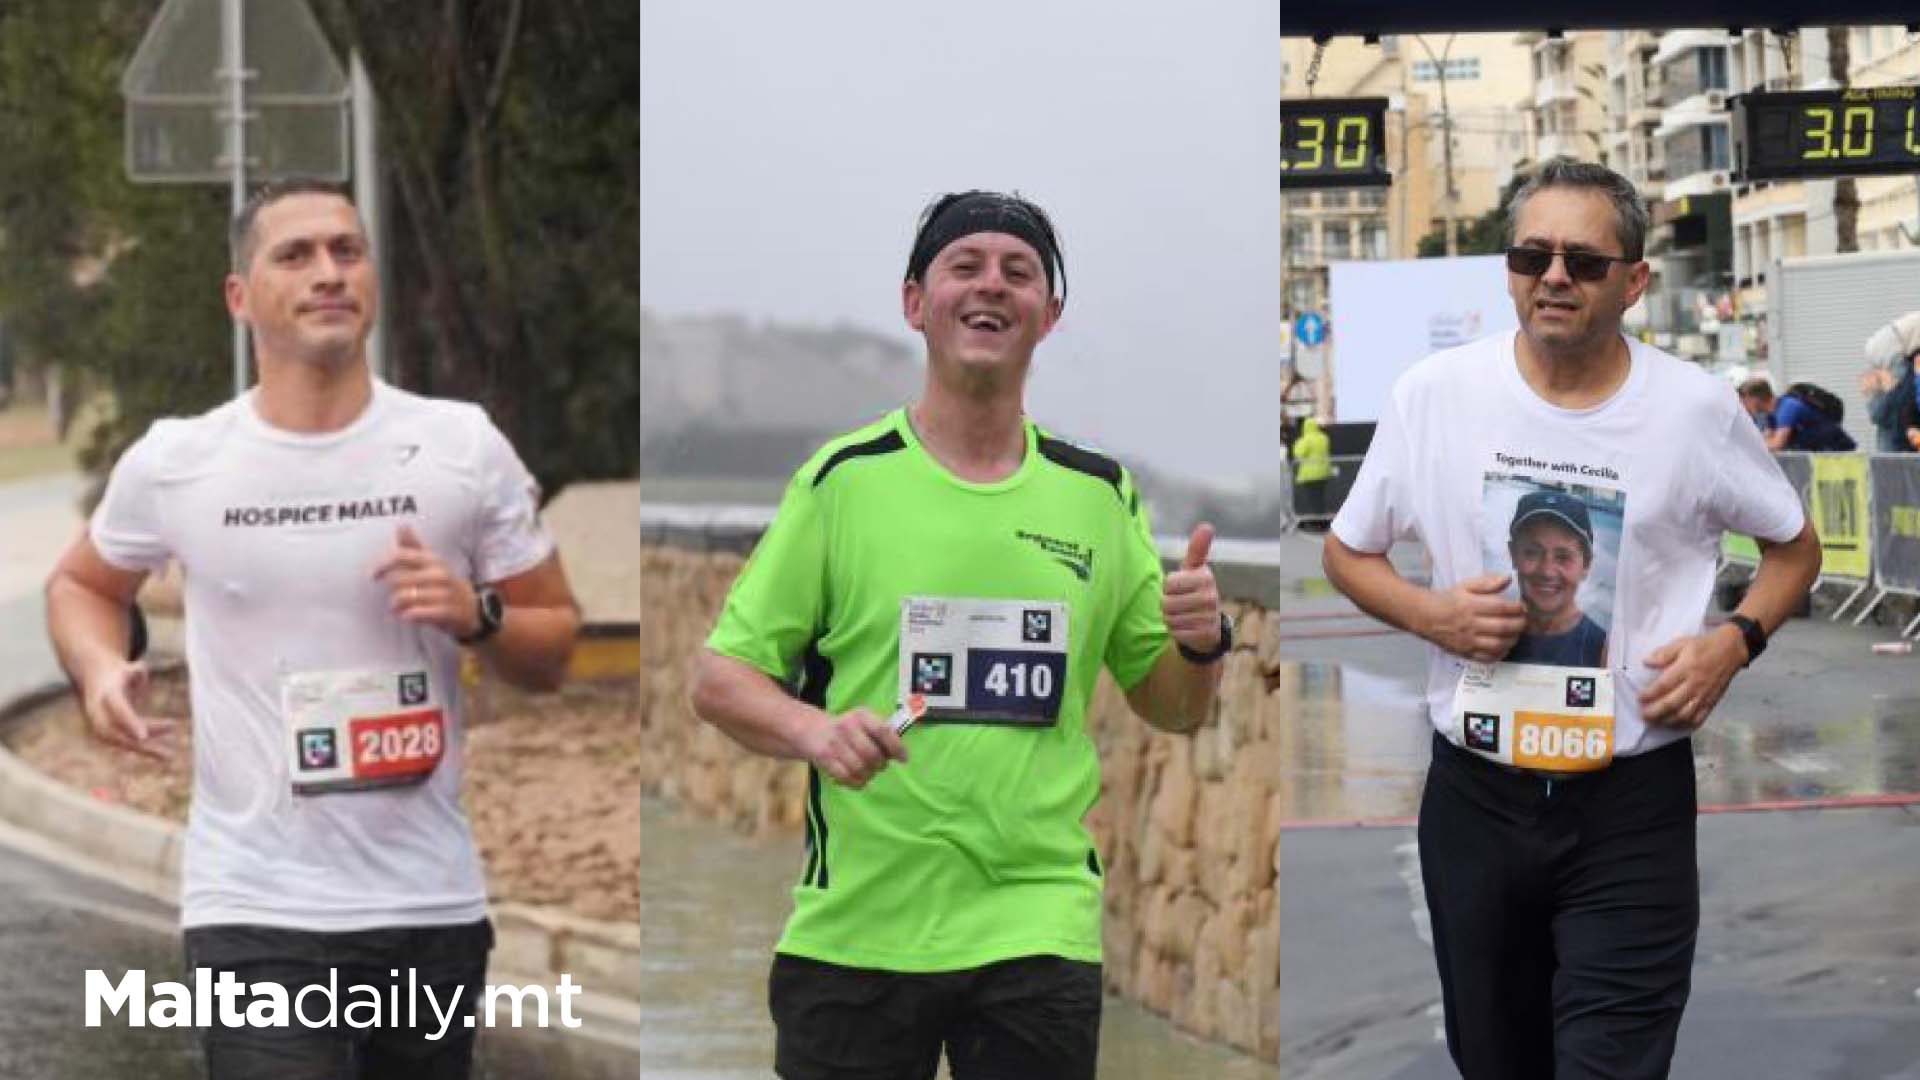 Hospice Malta Runners Raise Over €3,200